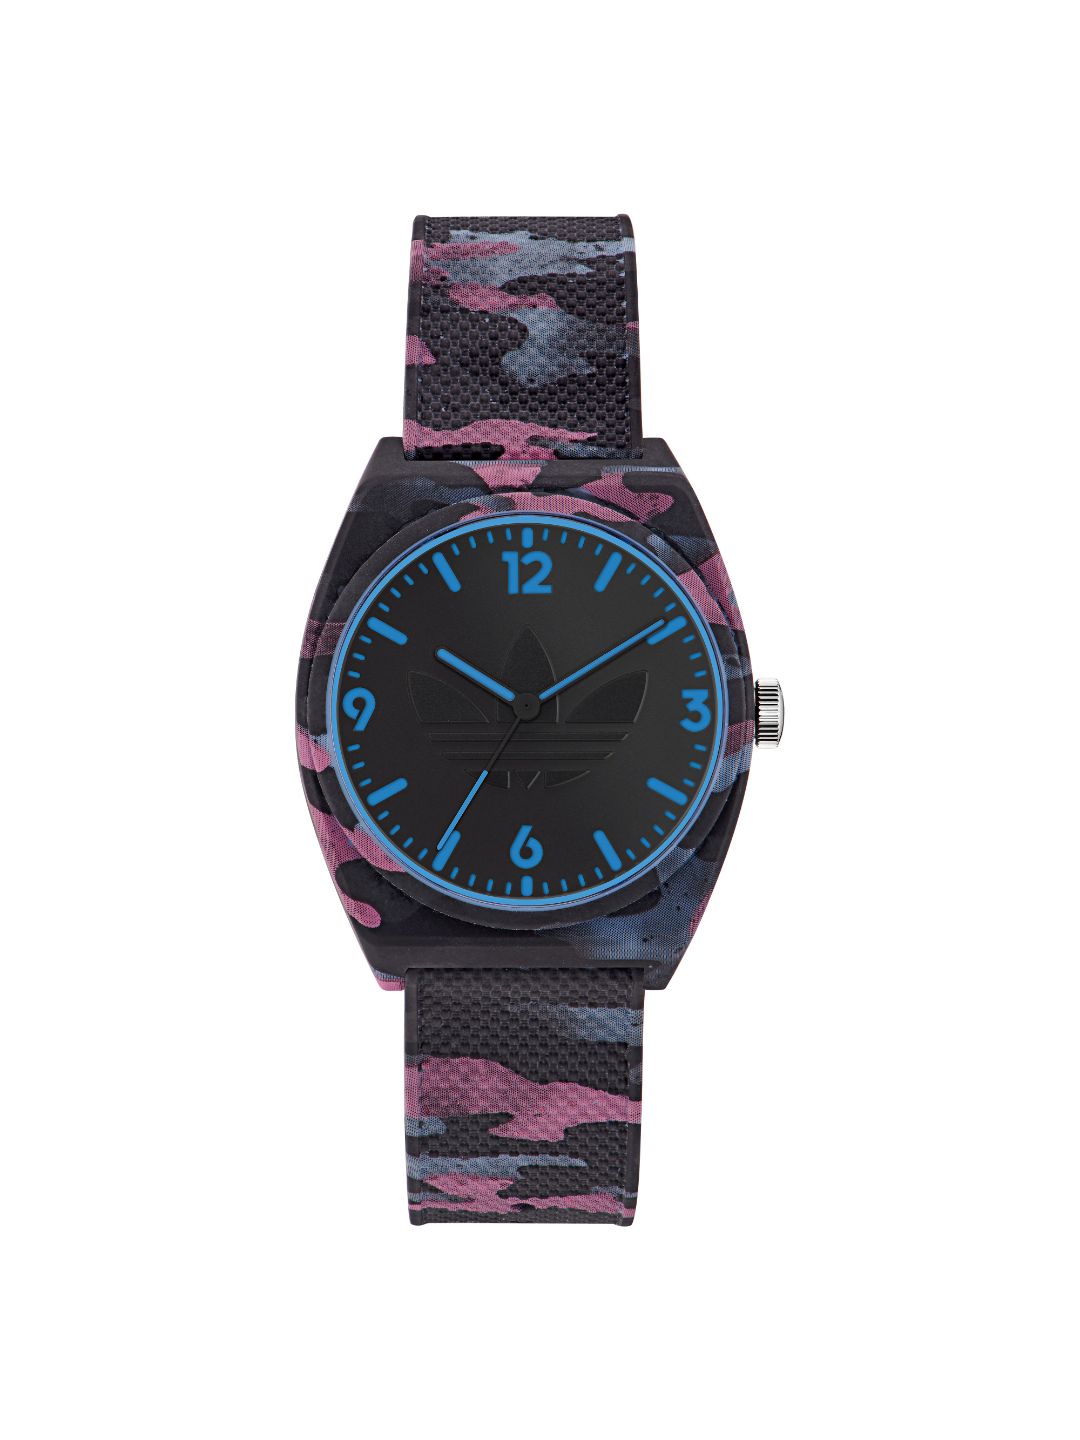 Adidas Originals Black Dial Unisex Watch - AOST22569